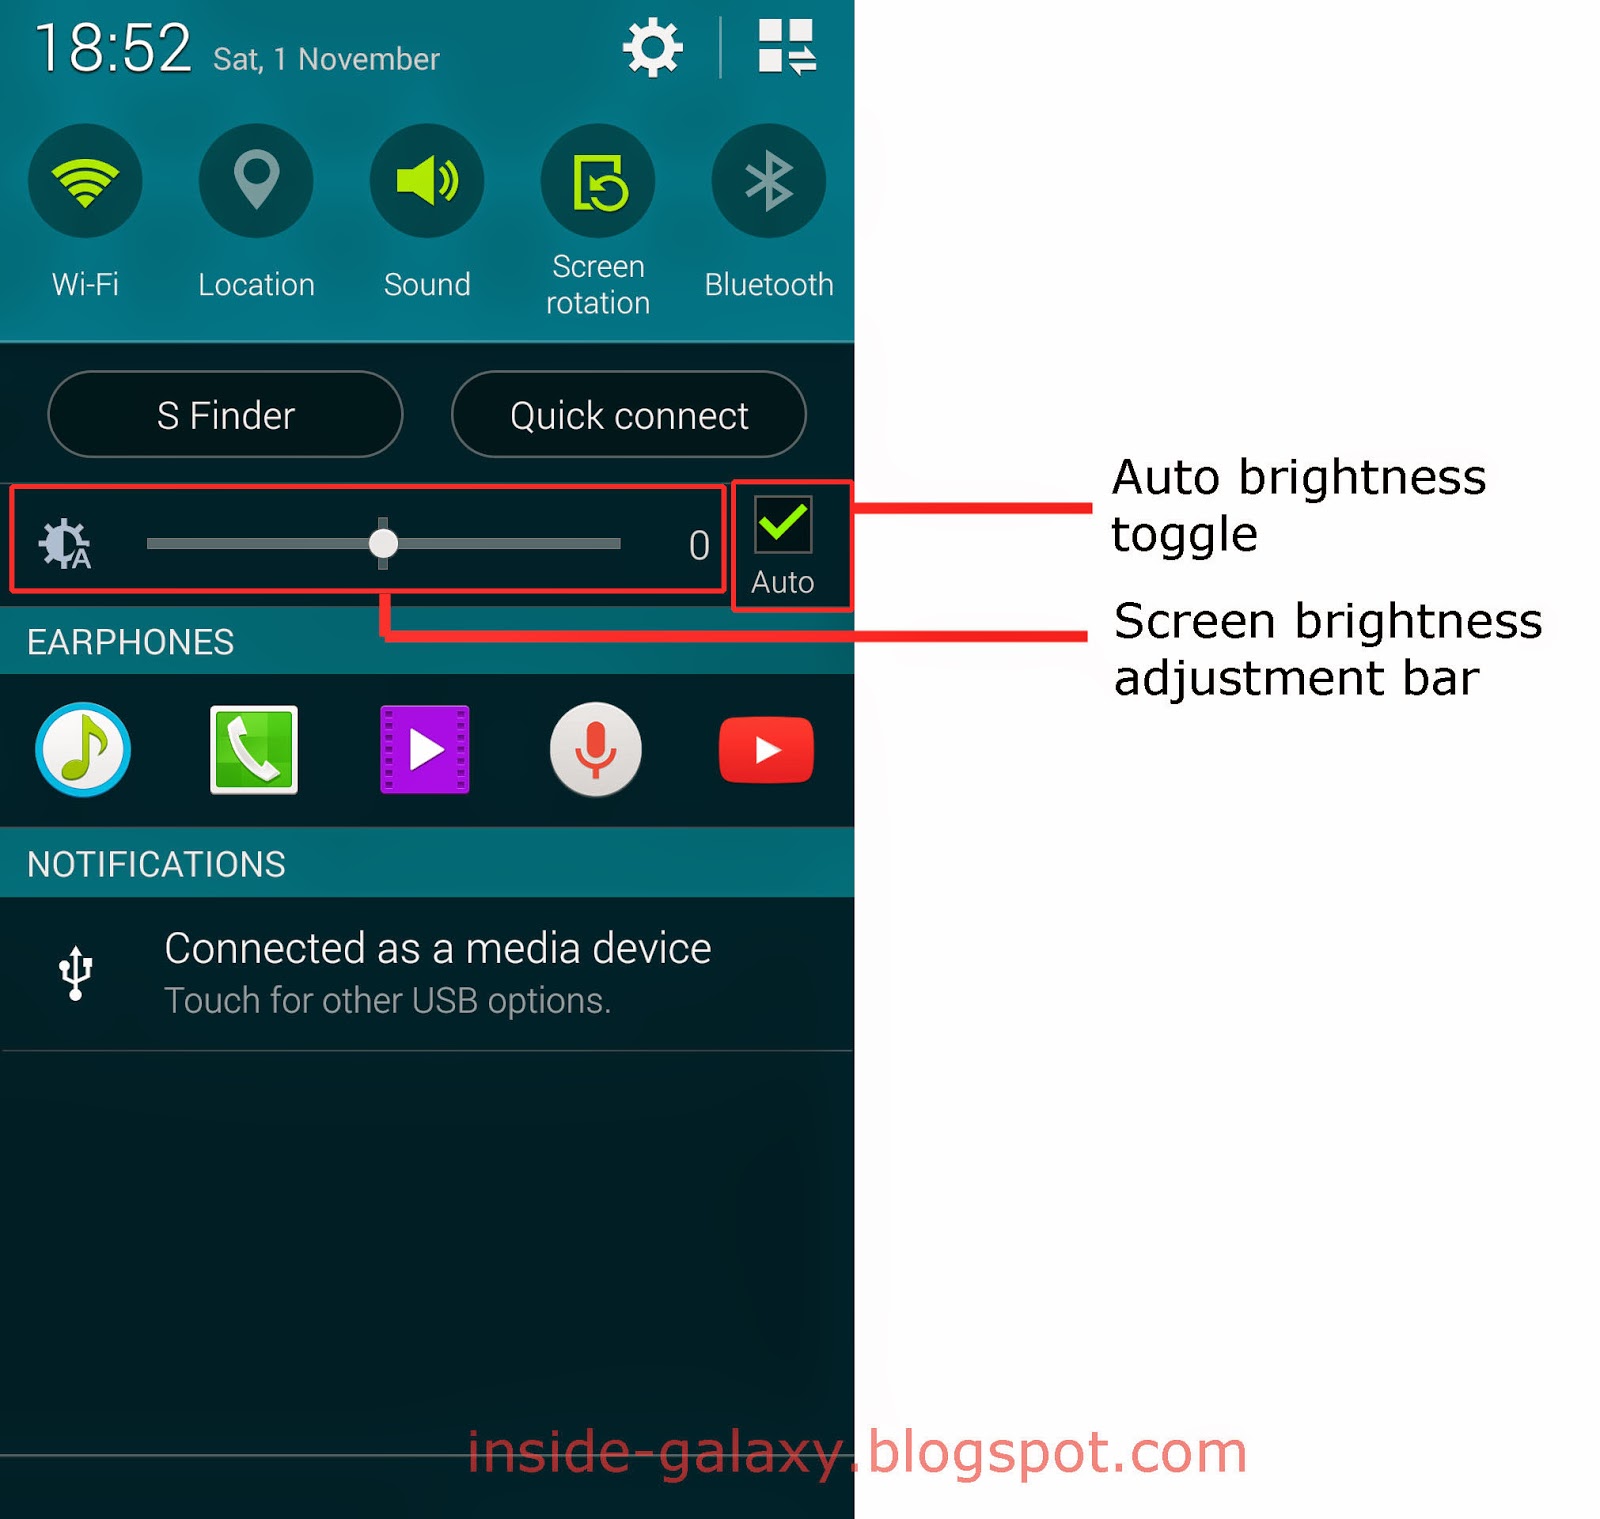 Inside Galaxy Samsung Galaxy S5 How To Adjust Screen Brightness In